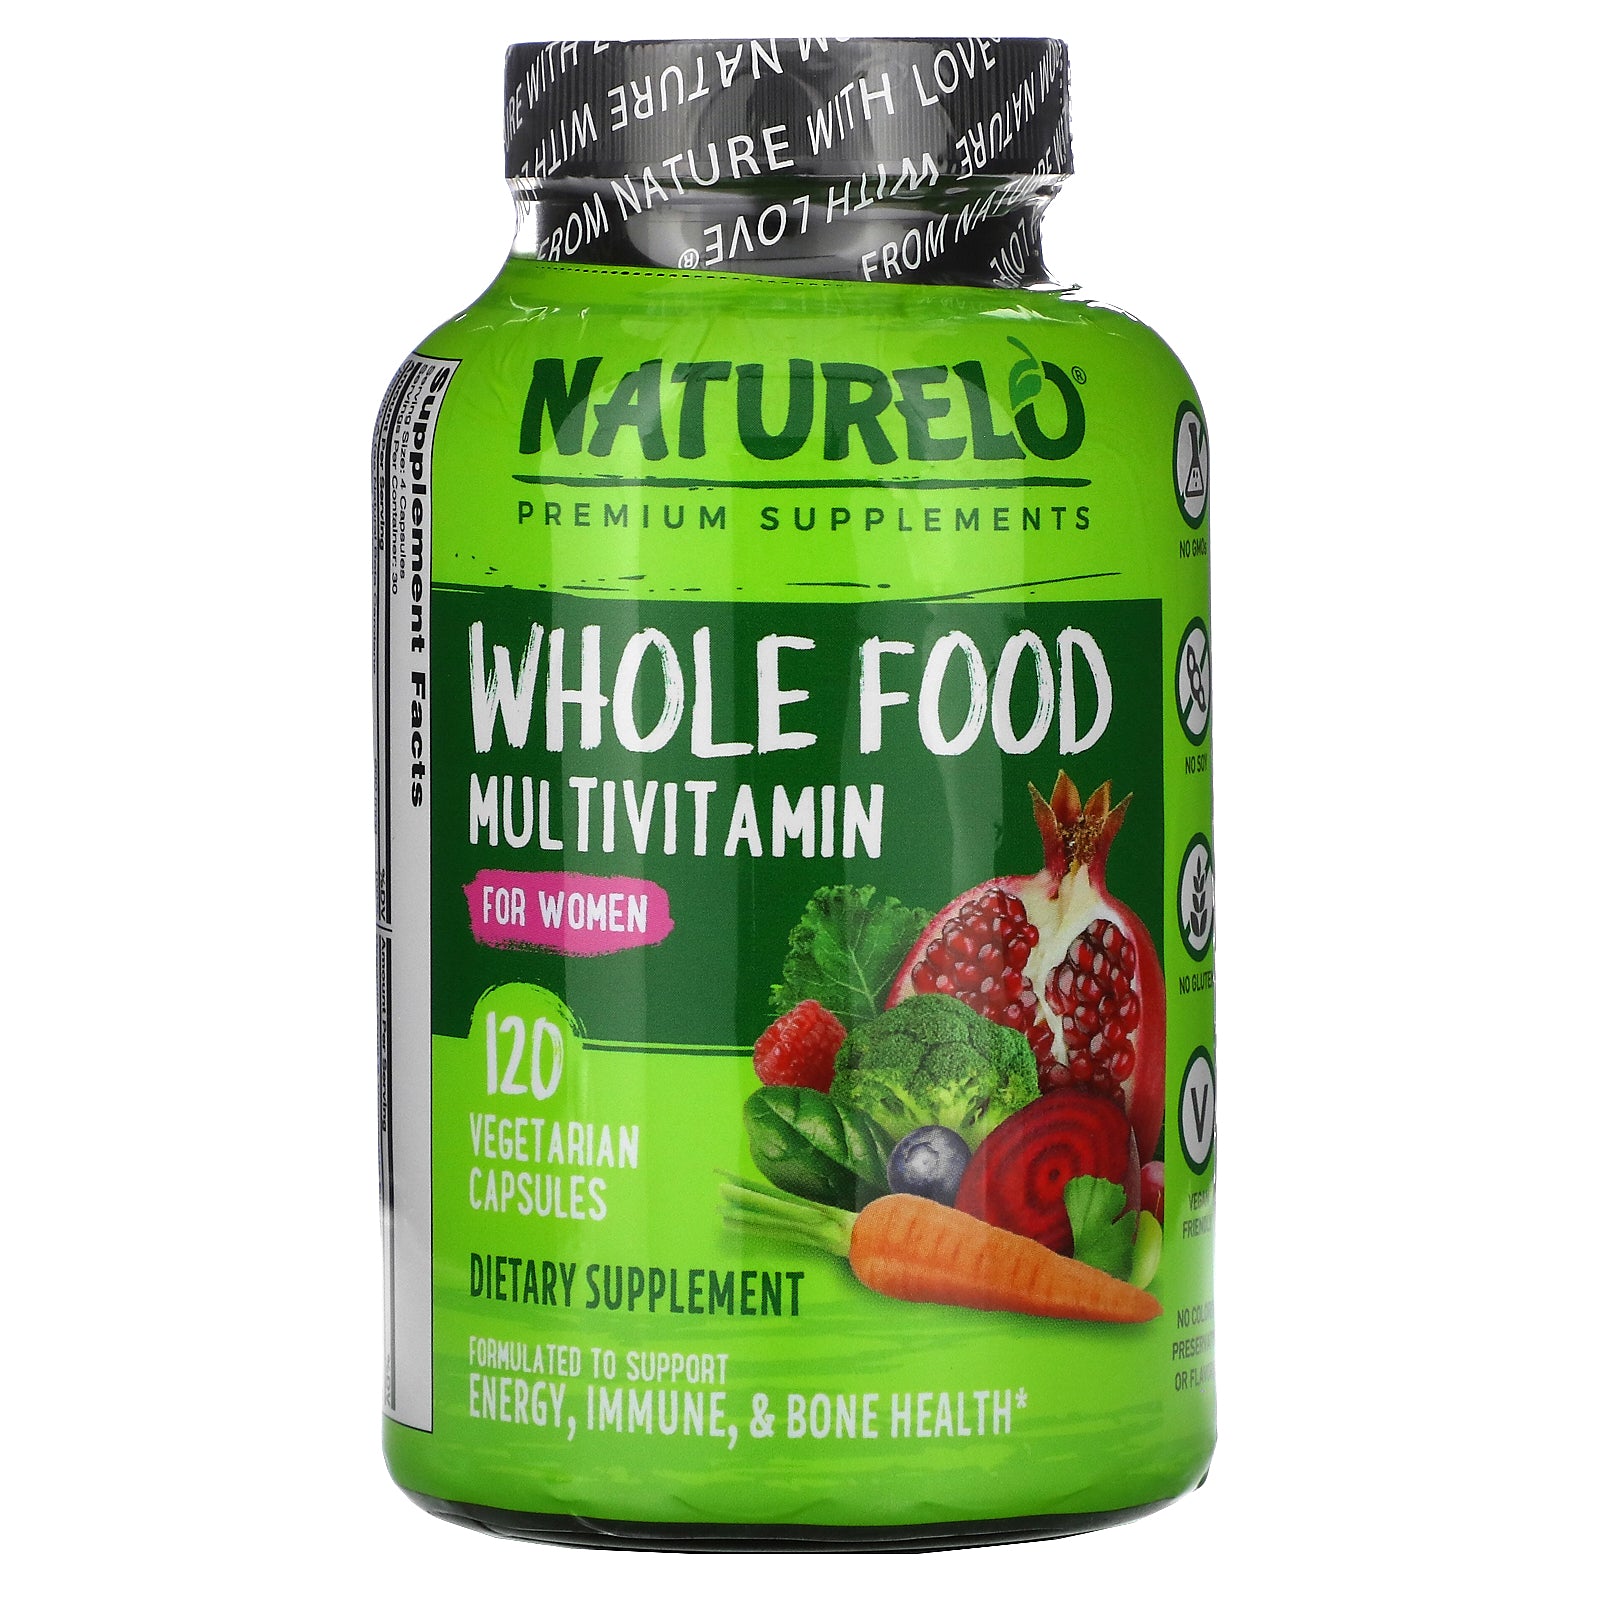 NATURELO, Whole Food Multivitamin for Women, 120 Vegetarian Capsules